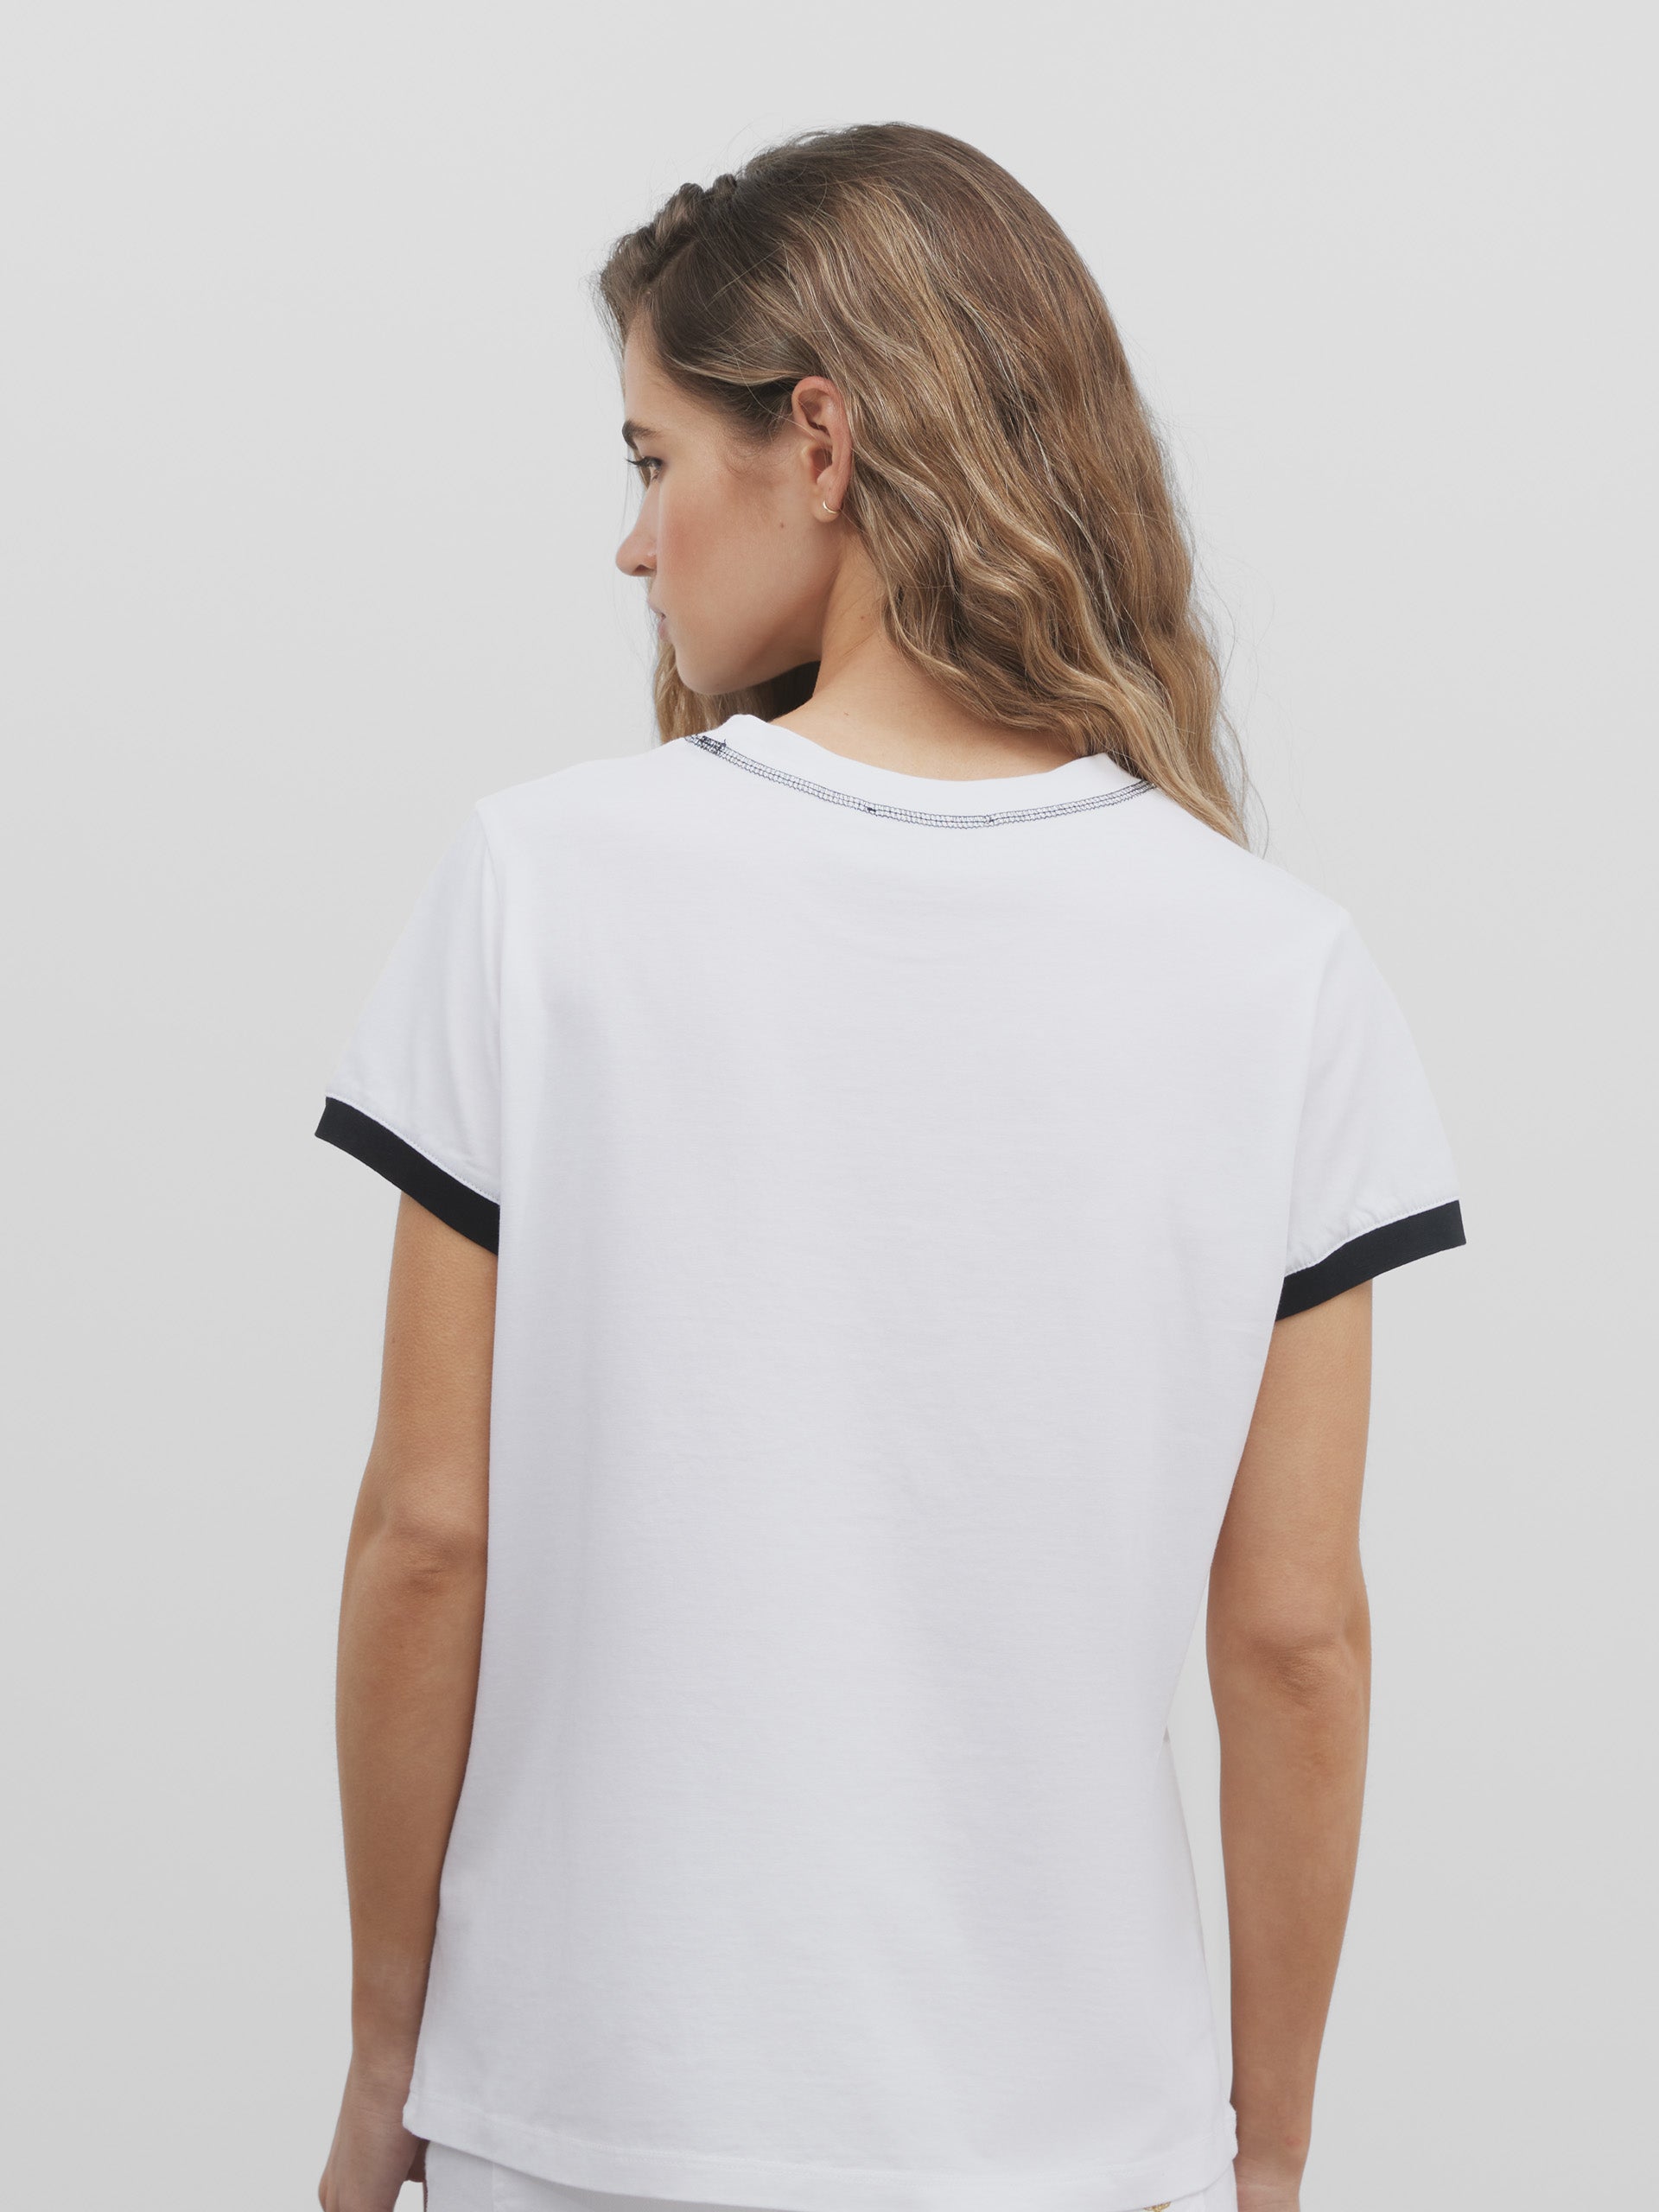 Women's Silbon retro white t-shirt